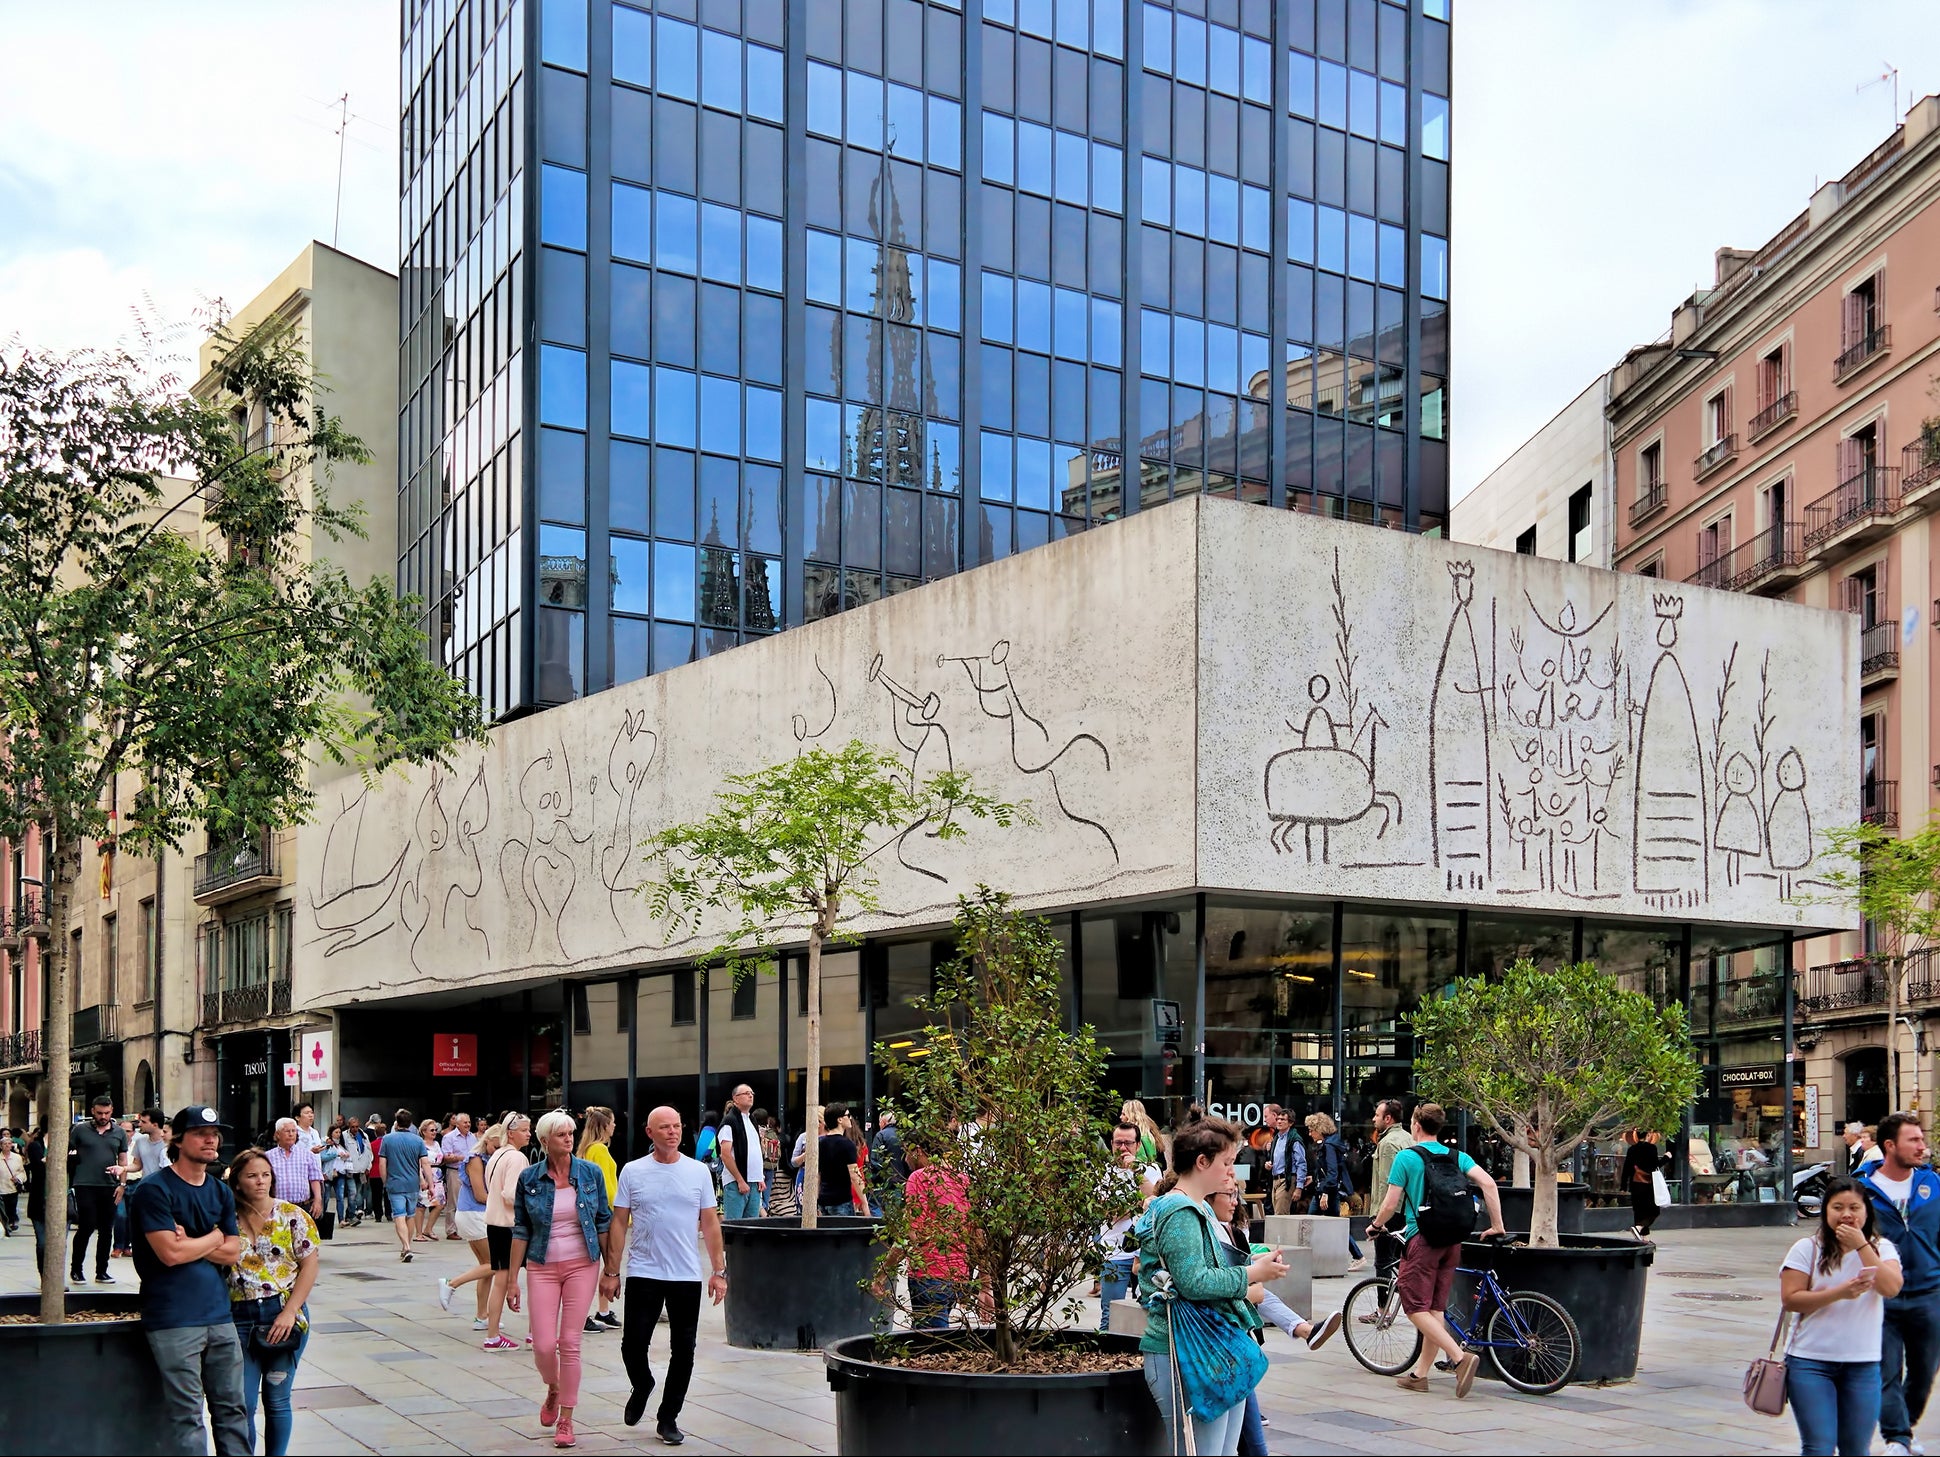 Picasso’s work on the facade of Col·legi d’Arquitectes de Catalunya